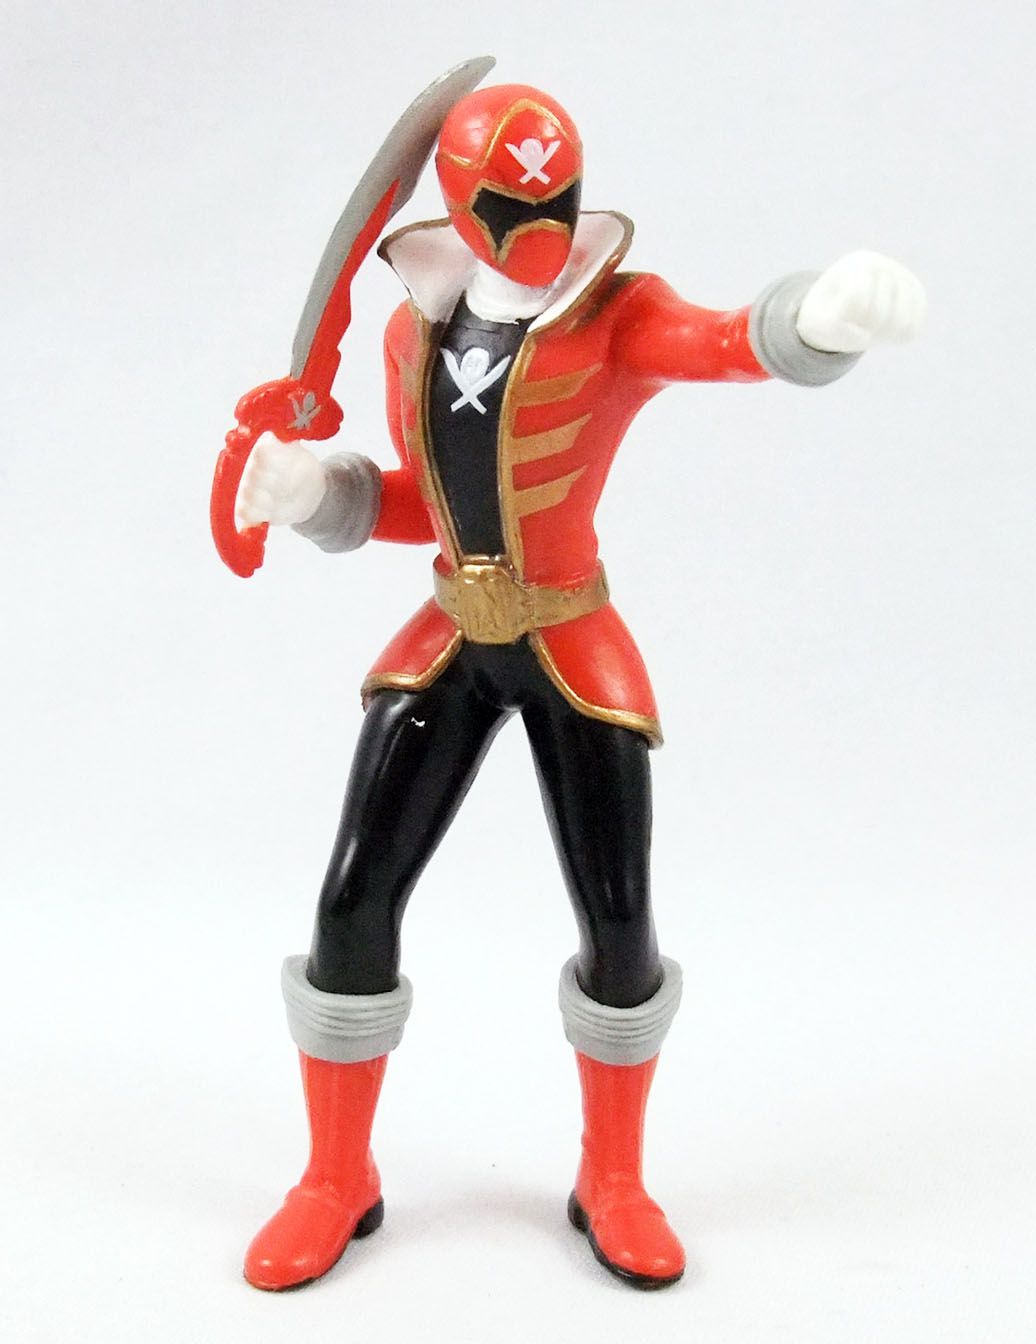 Bandai - Figurine Power Ranger - Ninja rouge